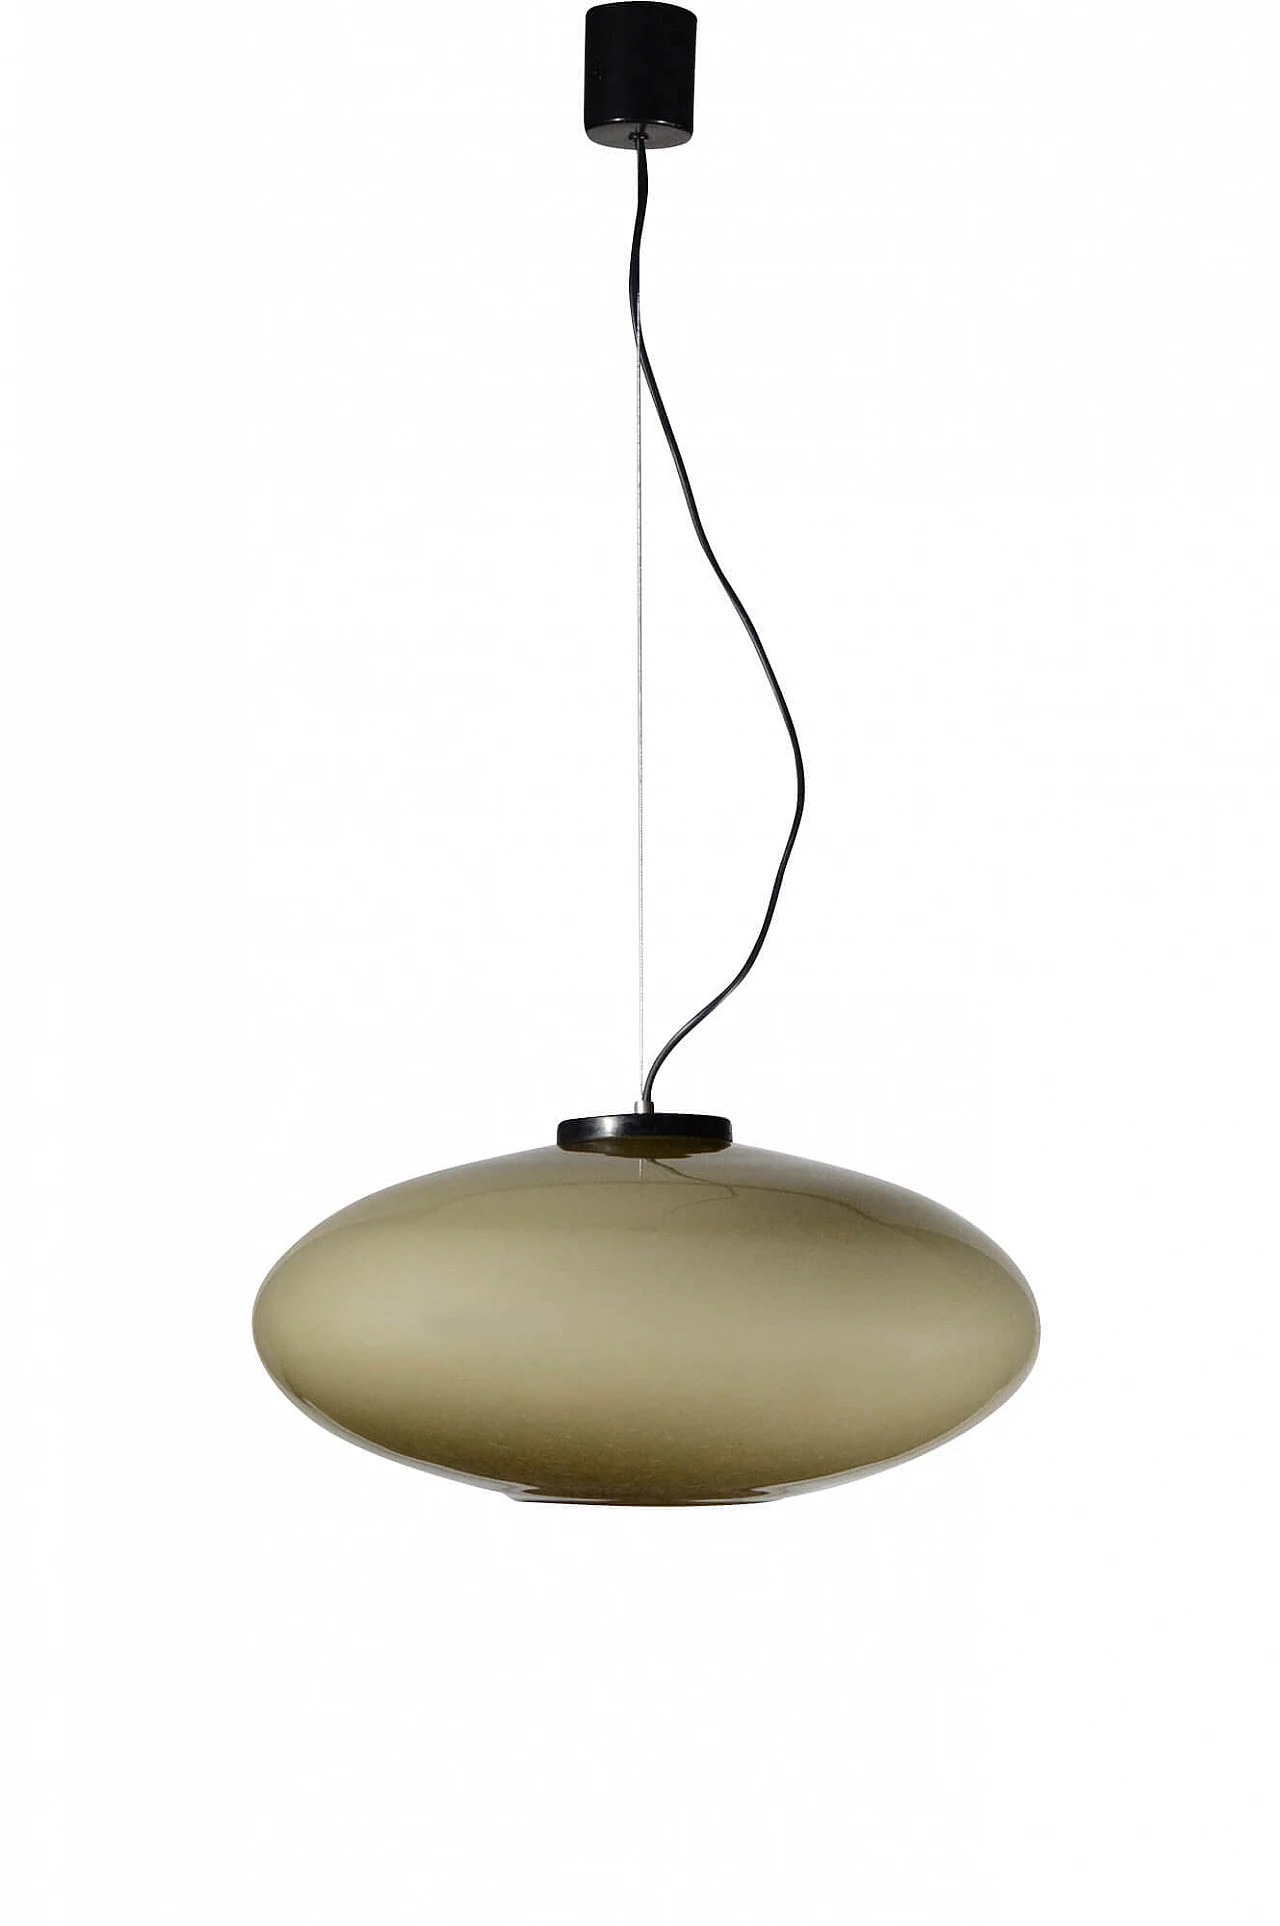 Suspension lamp in grey Murano glass by Gino Vistosi, 1960s 1228845